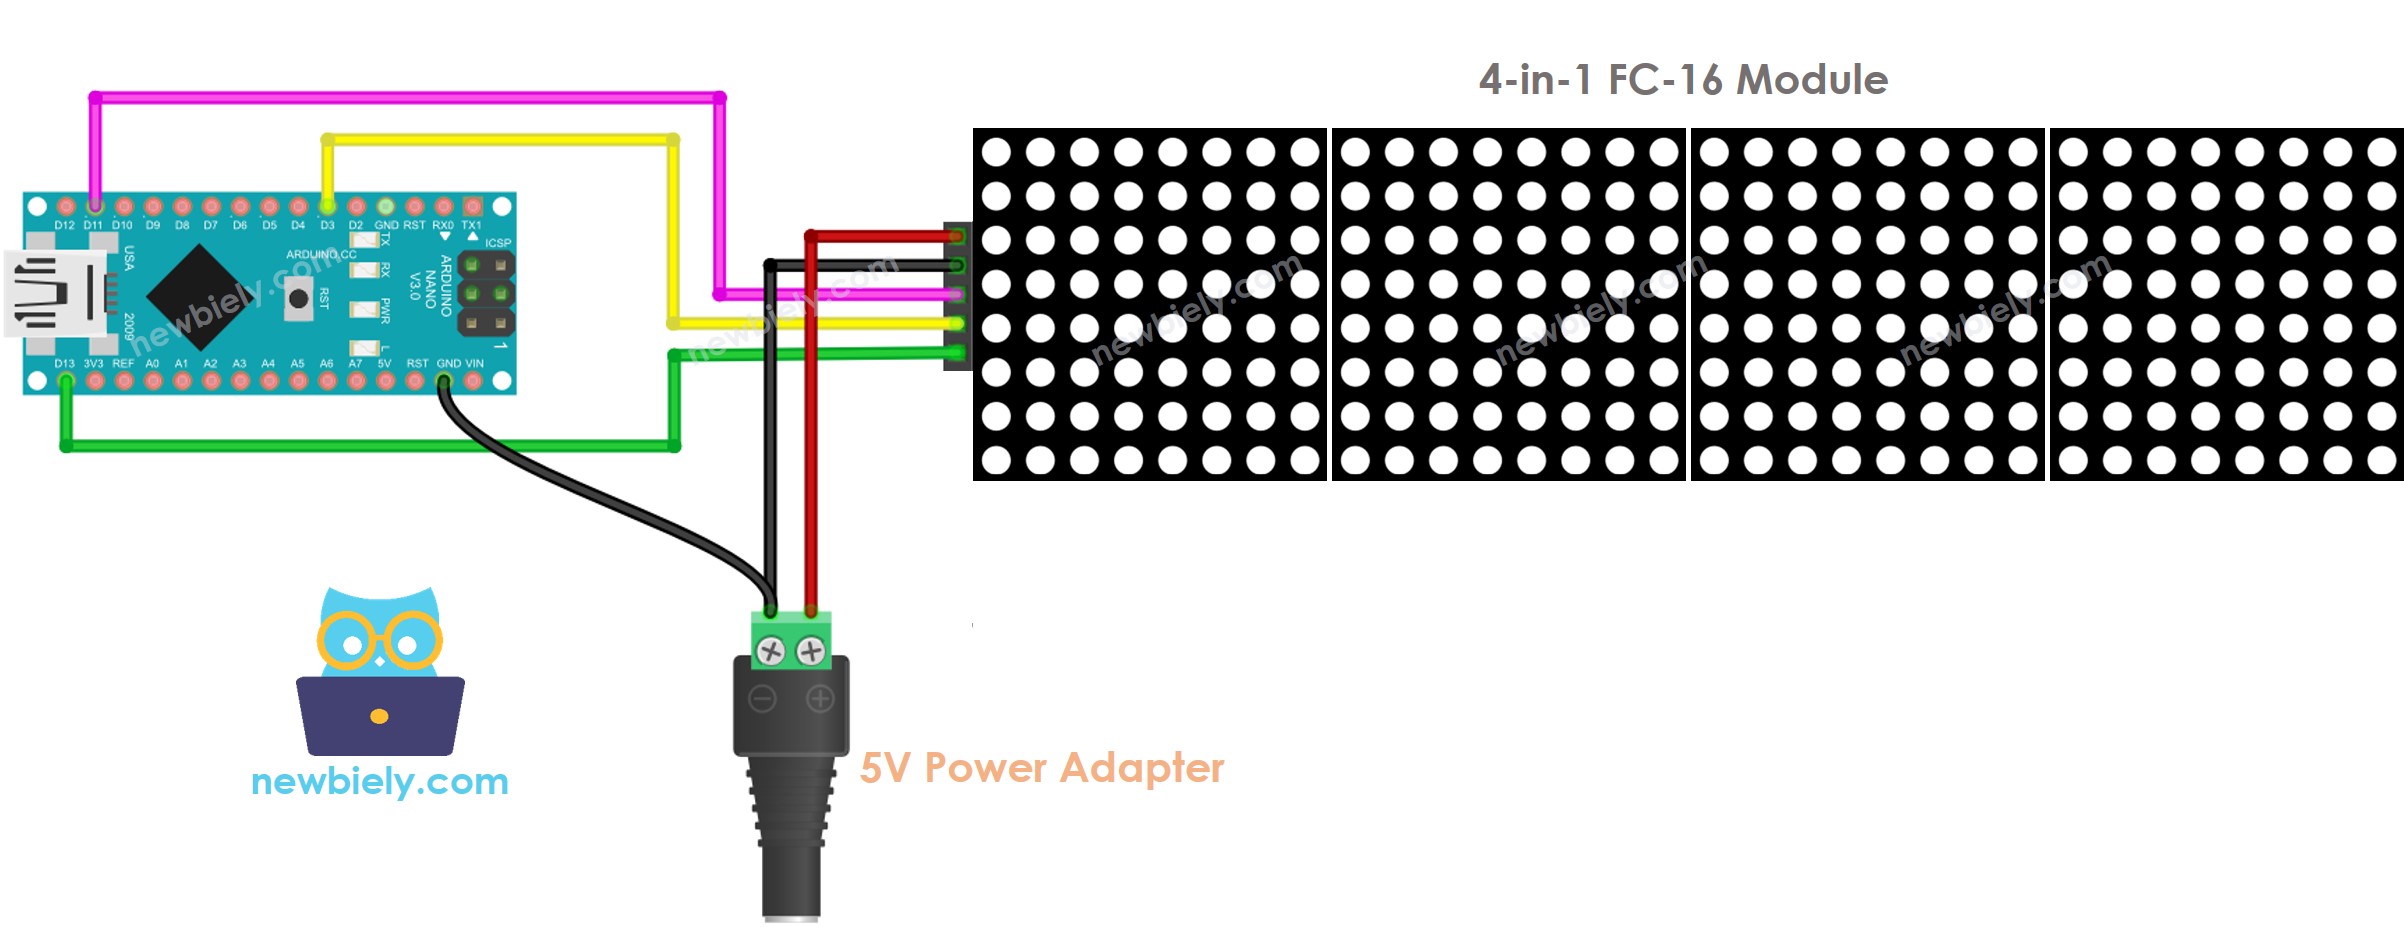 The wiring diagram between Arduino Nano and LED matrix display